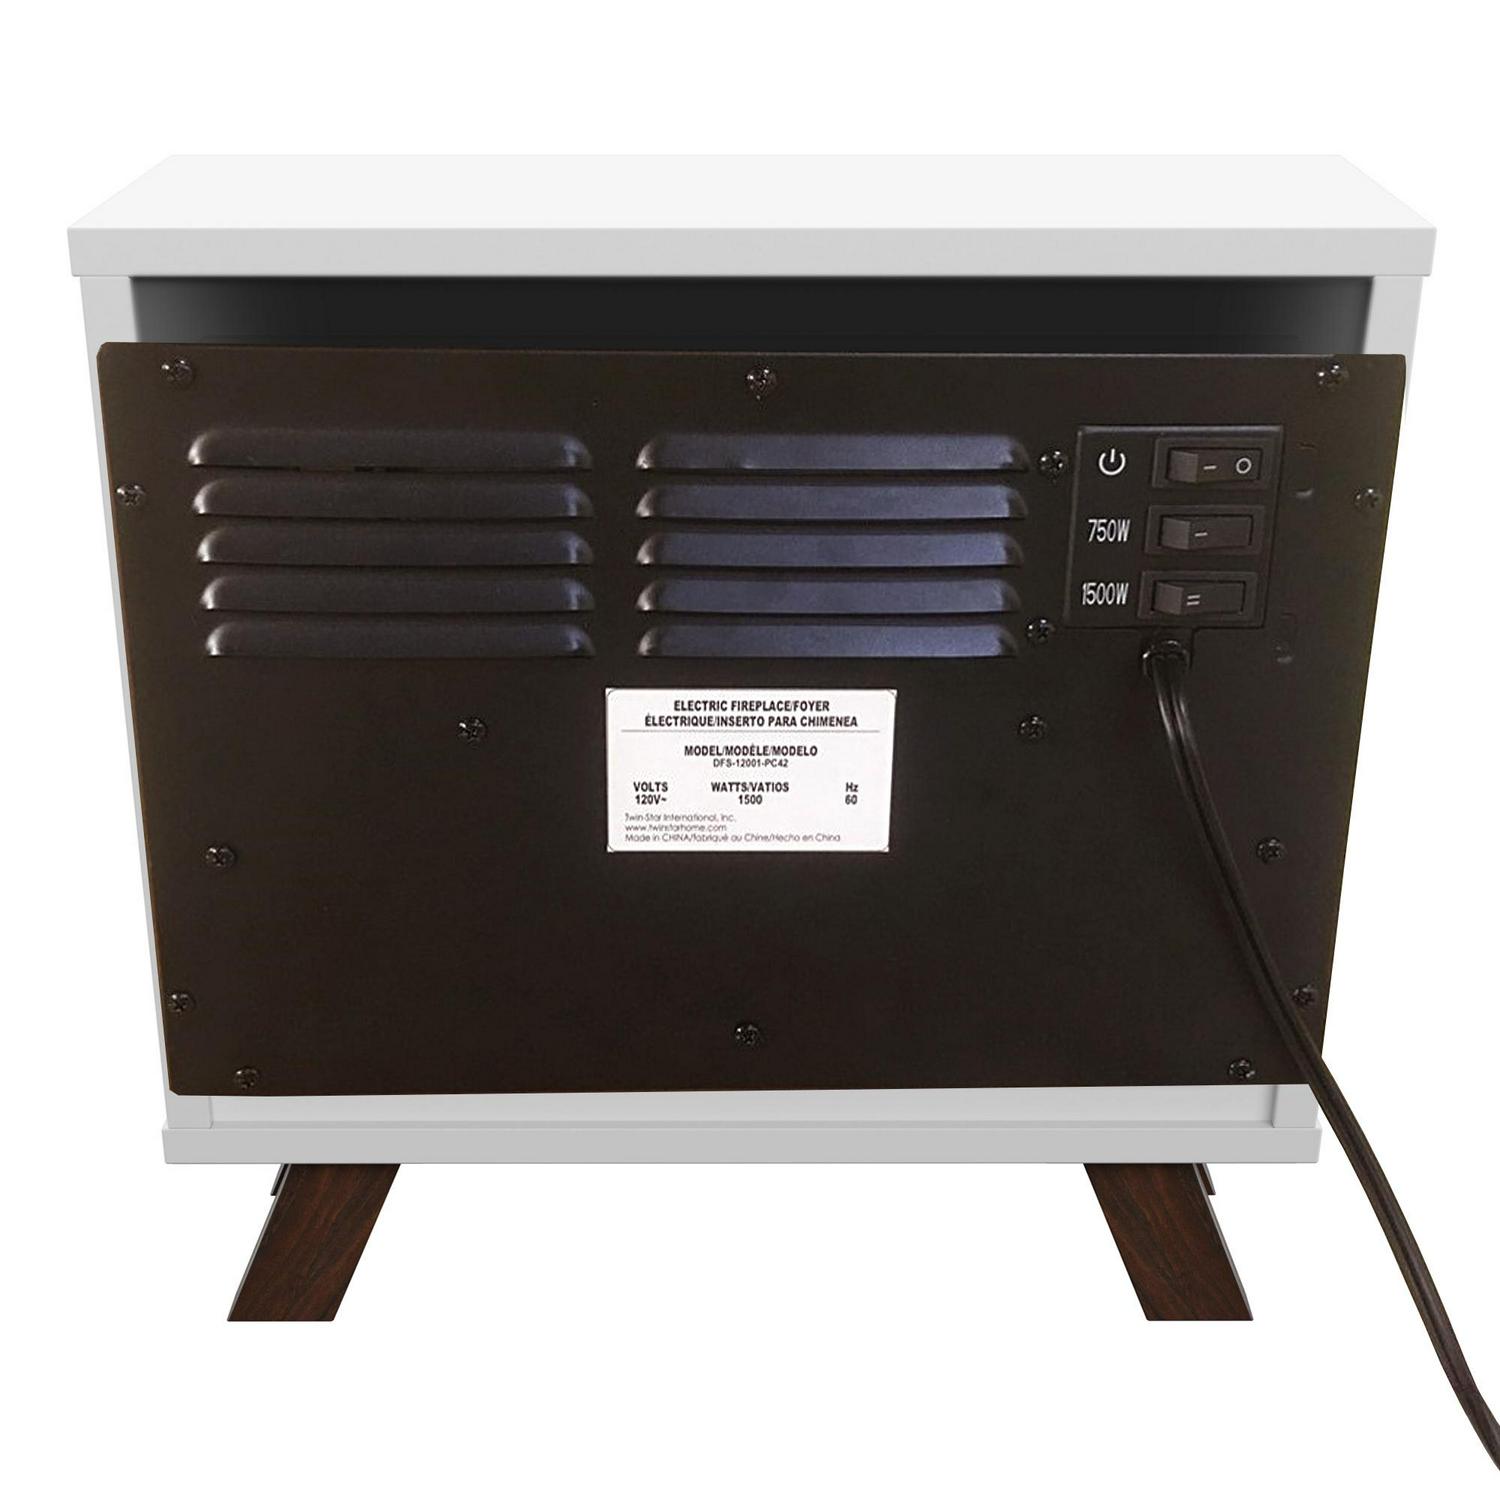 DuraflameA Mid Century Tabletop Electric Fireplace Space Heater